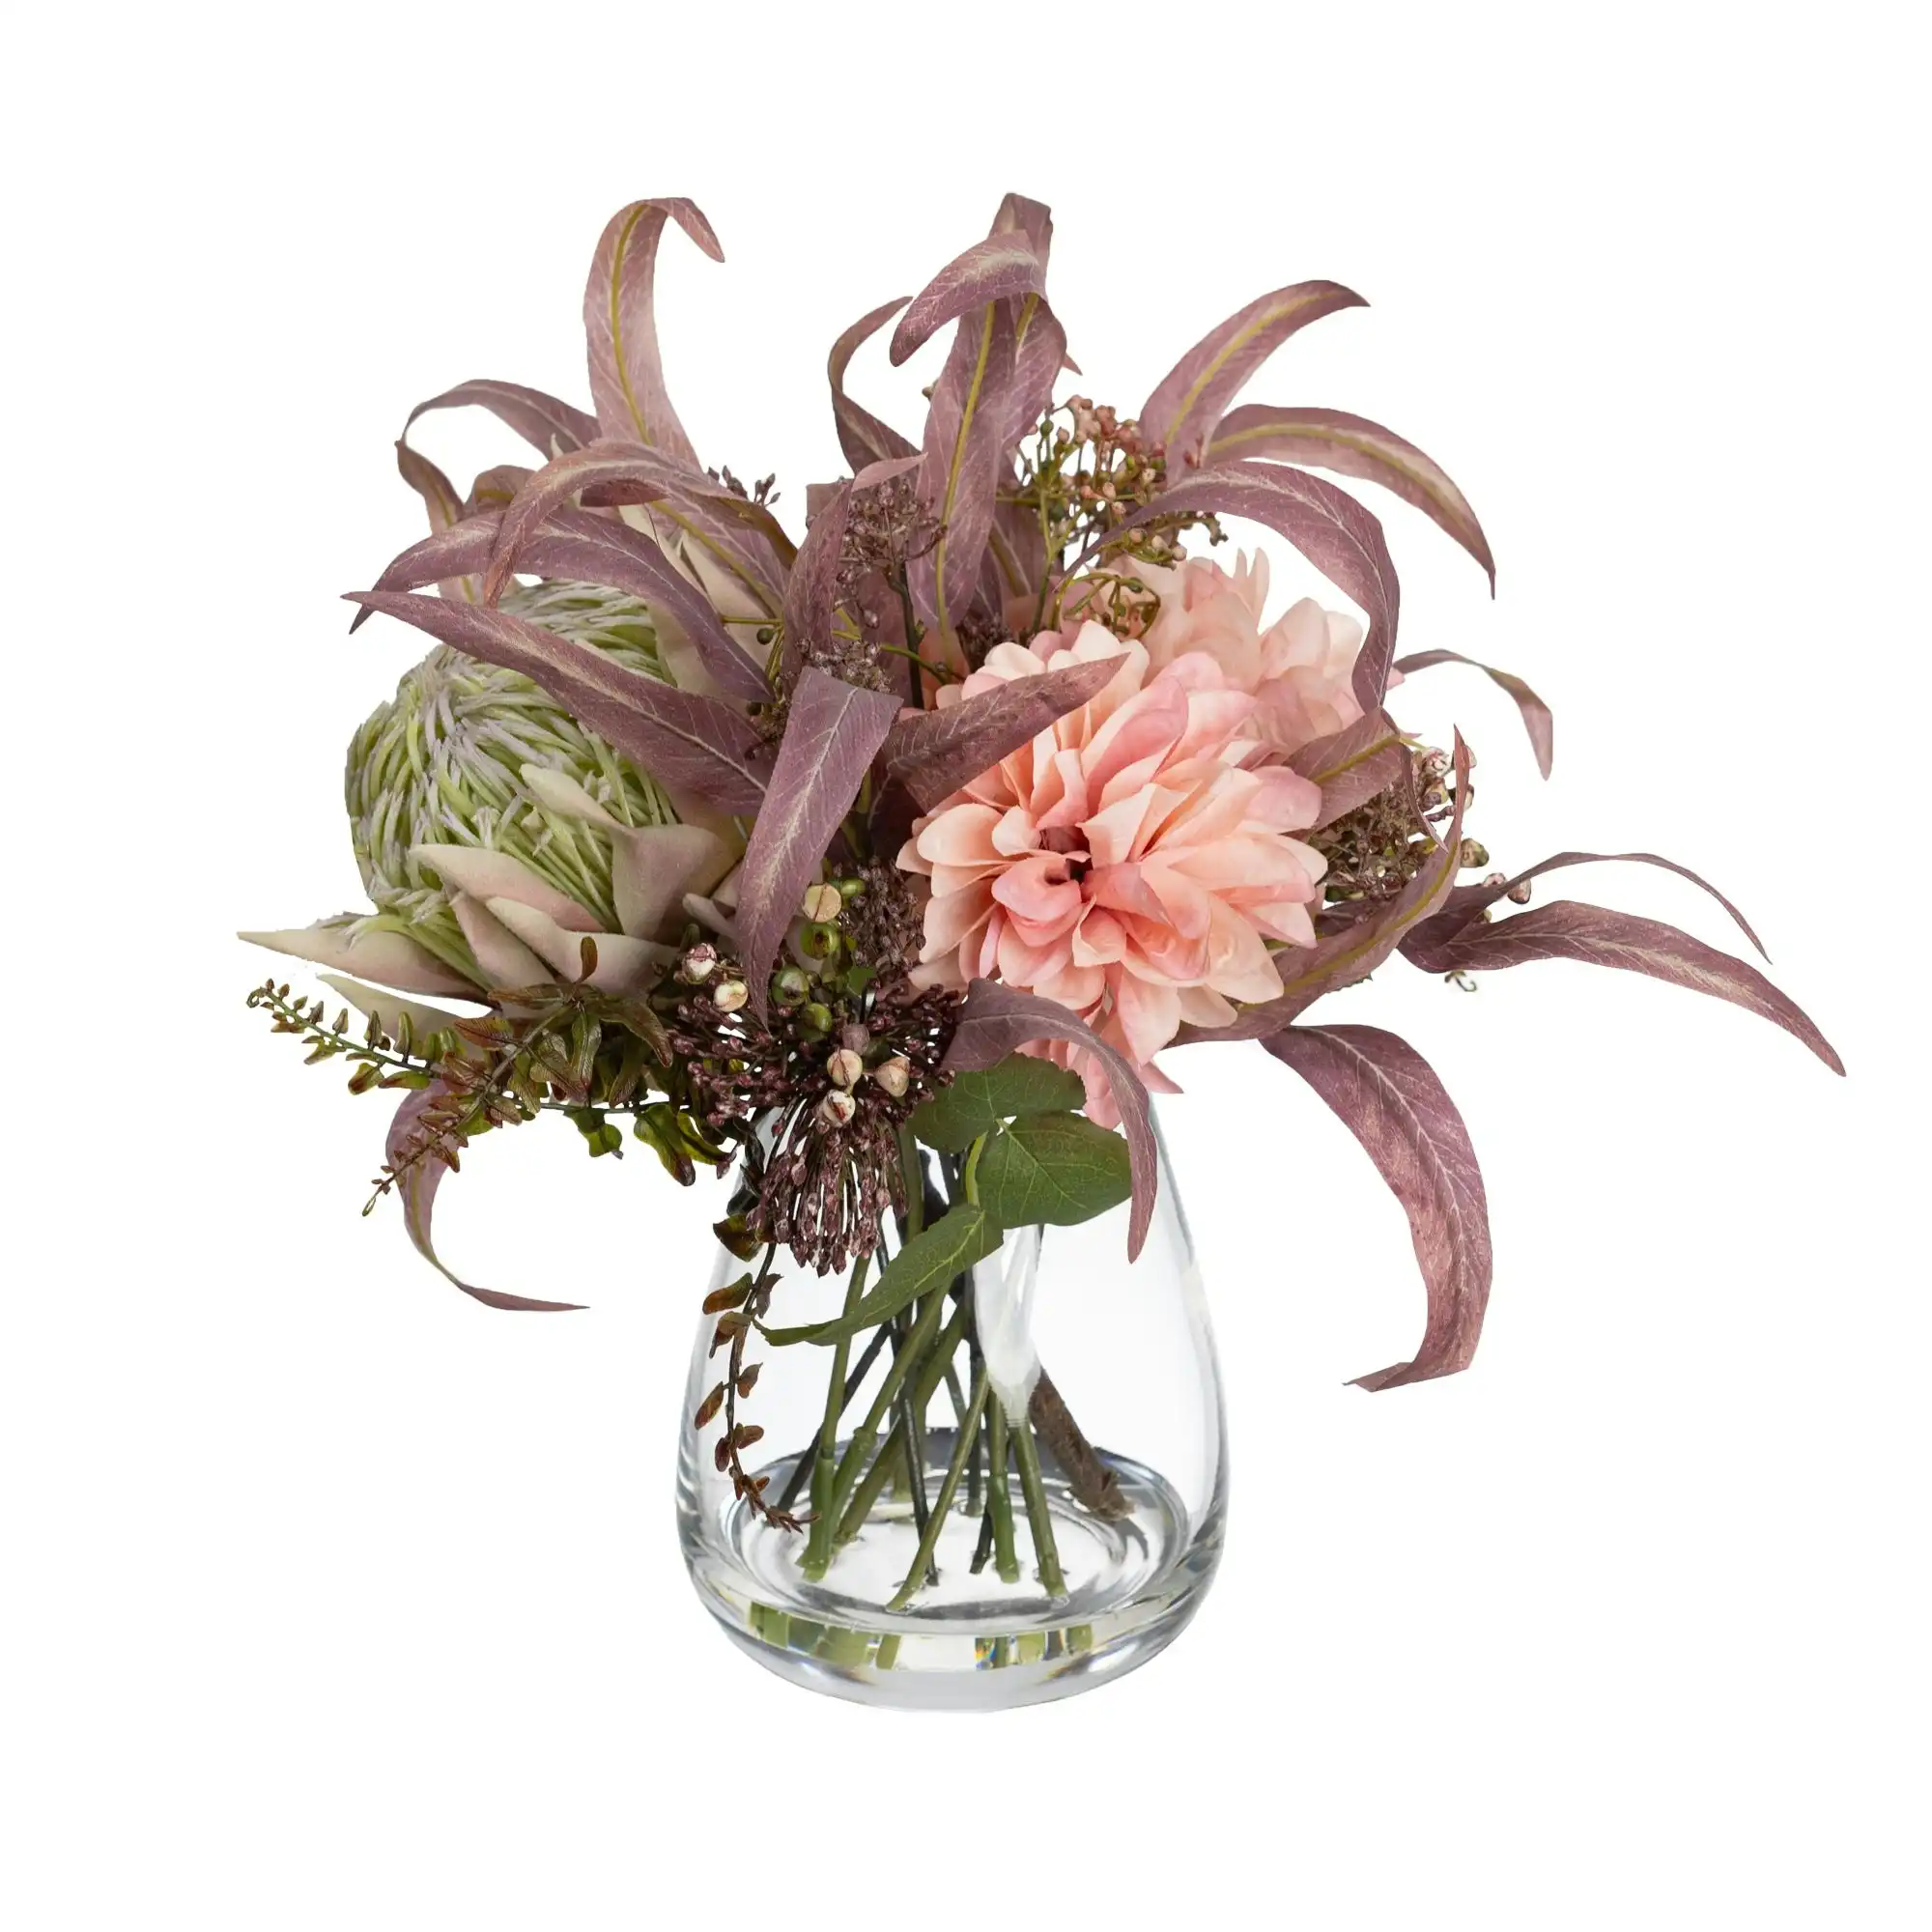 Glamorous Fusion Dusty Pink Dahlia & Protea Mixed Artificial Fake Plant Decorative Arrangement 39cm In Glass